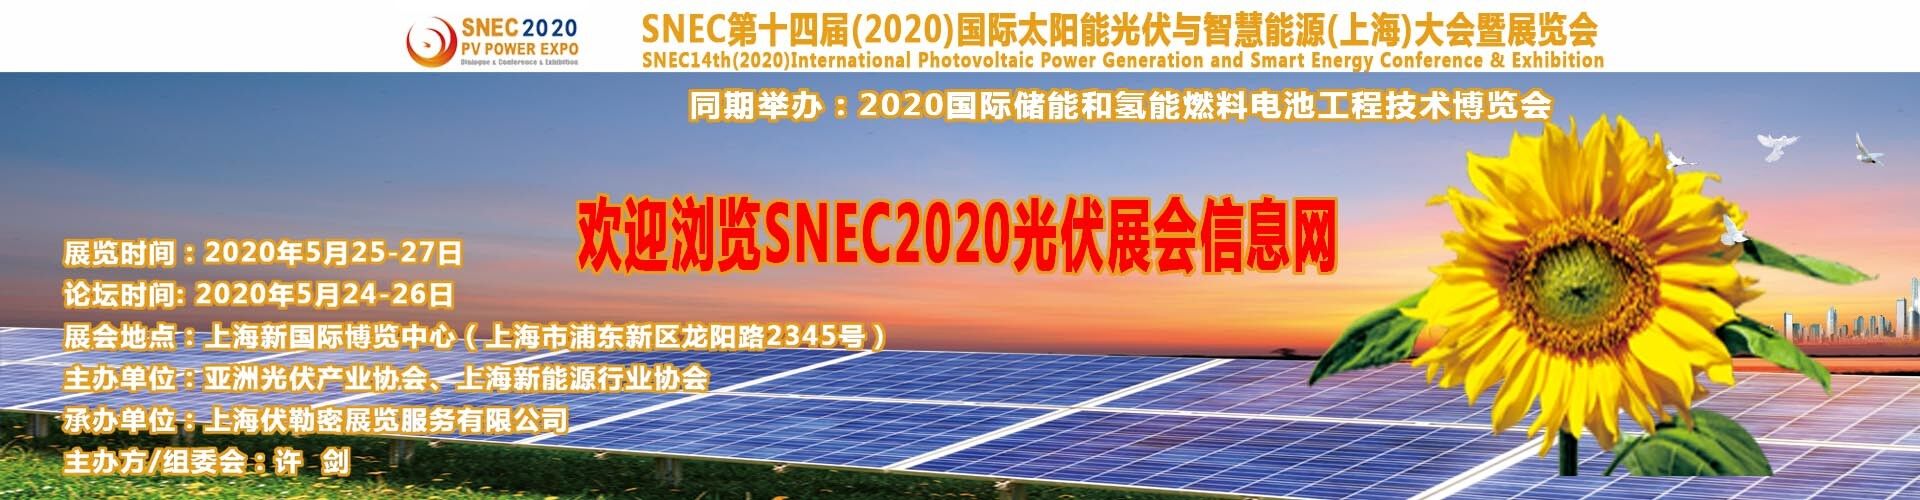 2018SNEC可再生能源展會